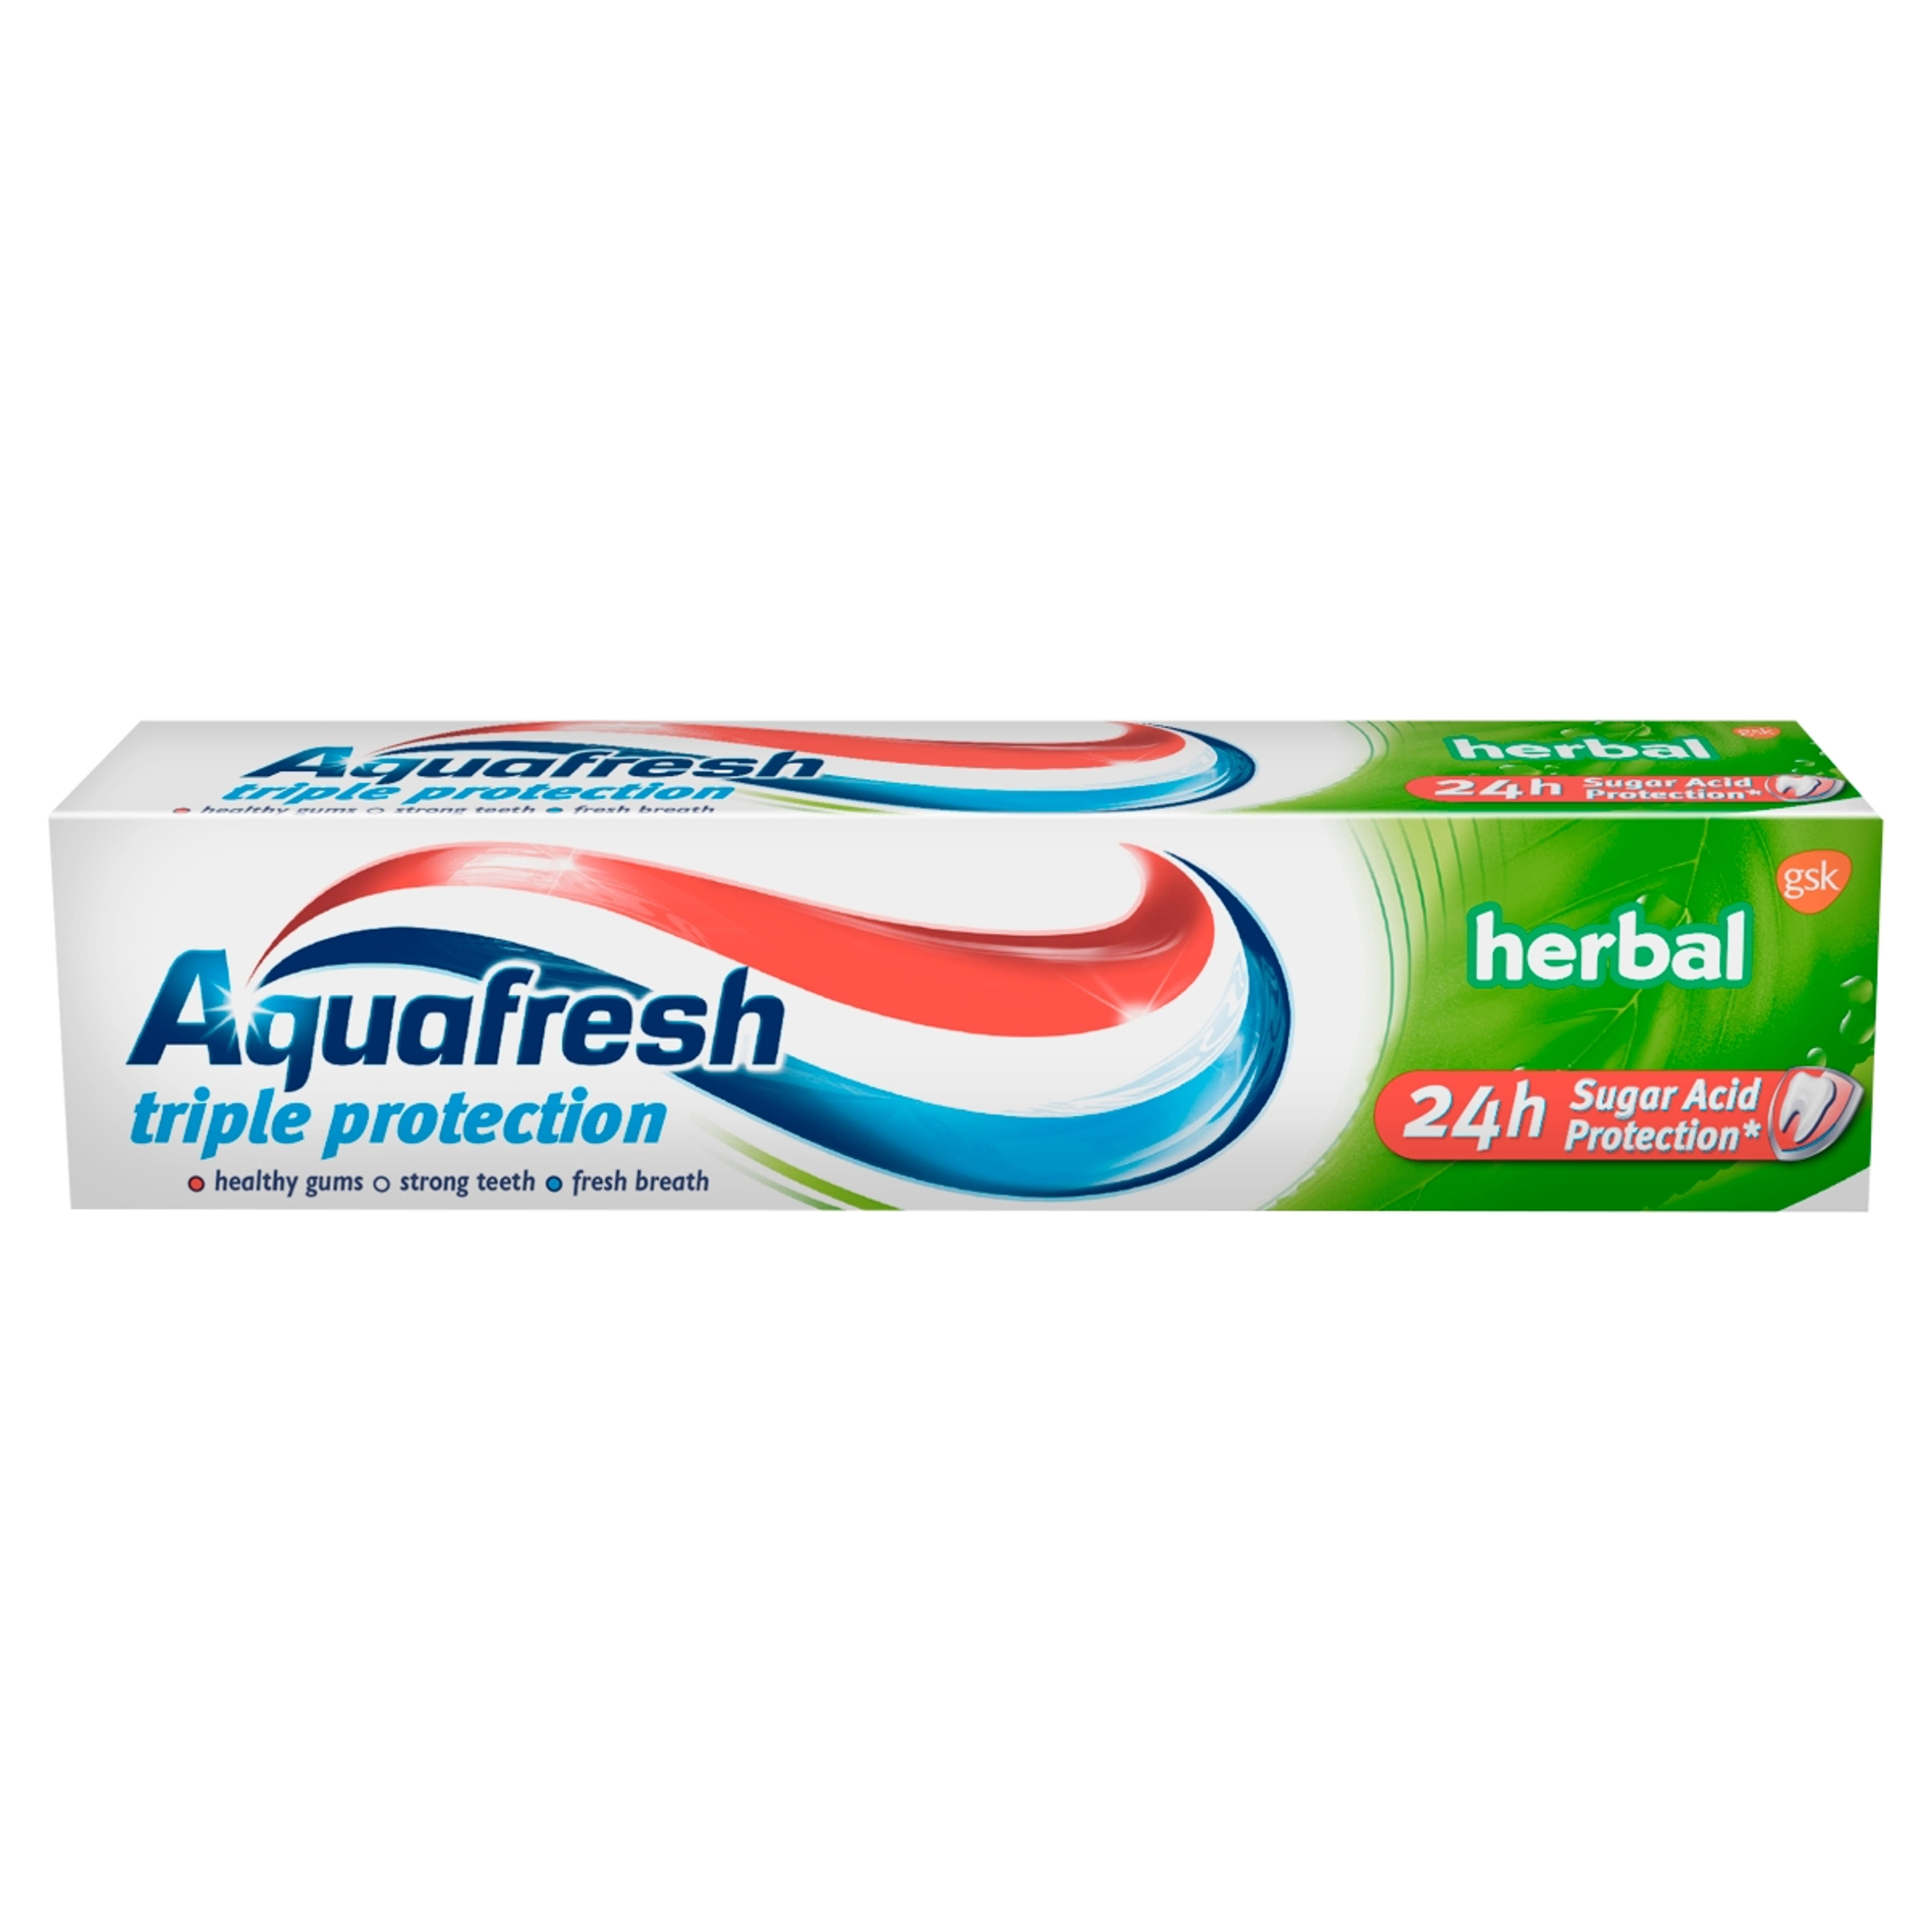 Aquafresh Herbal fogkrém - 100 ml-2